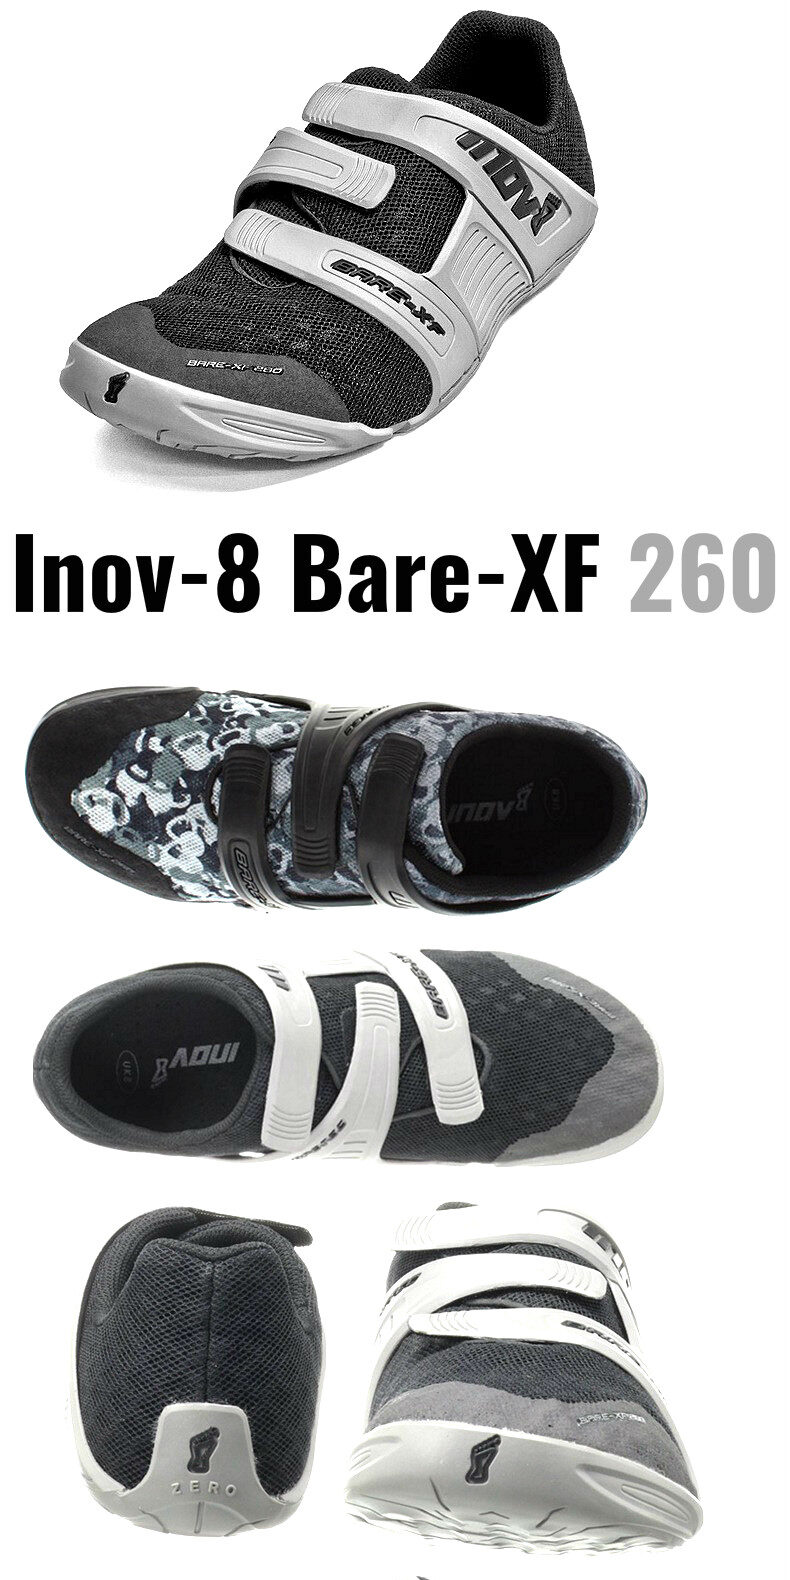 Inov-8 Bare-XF 260 Review